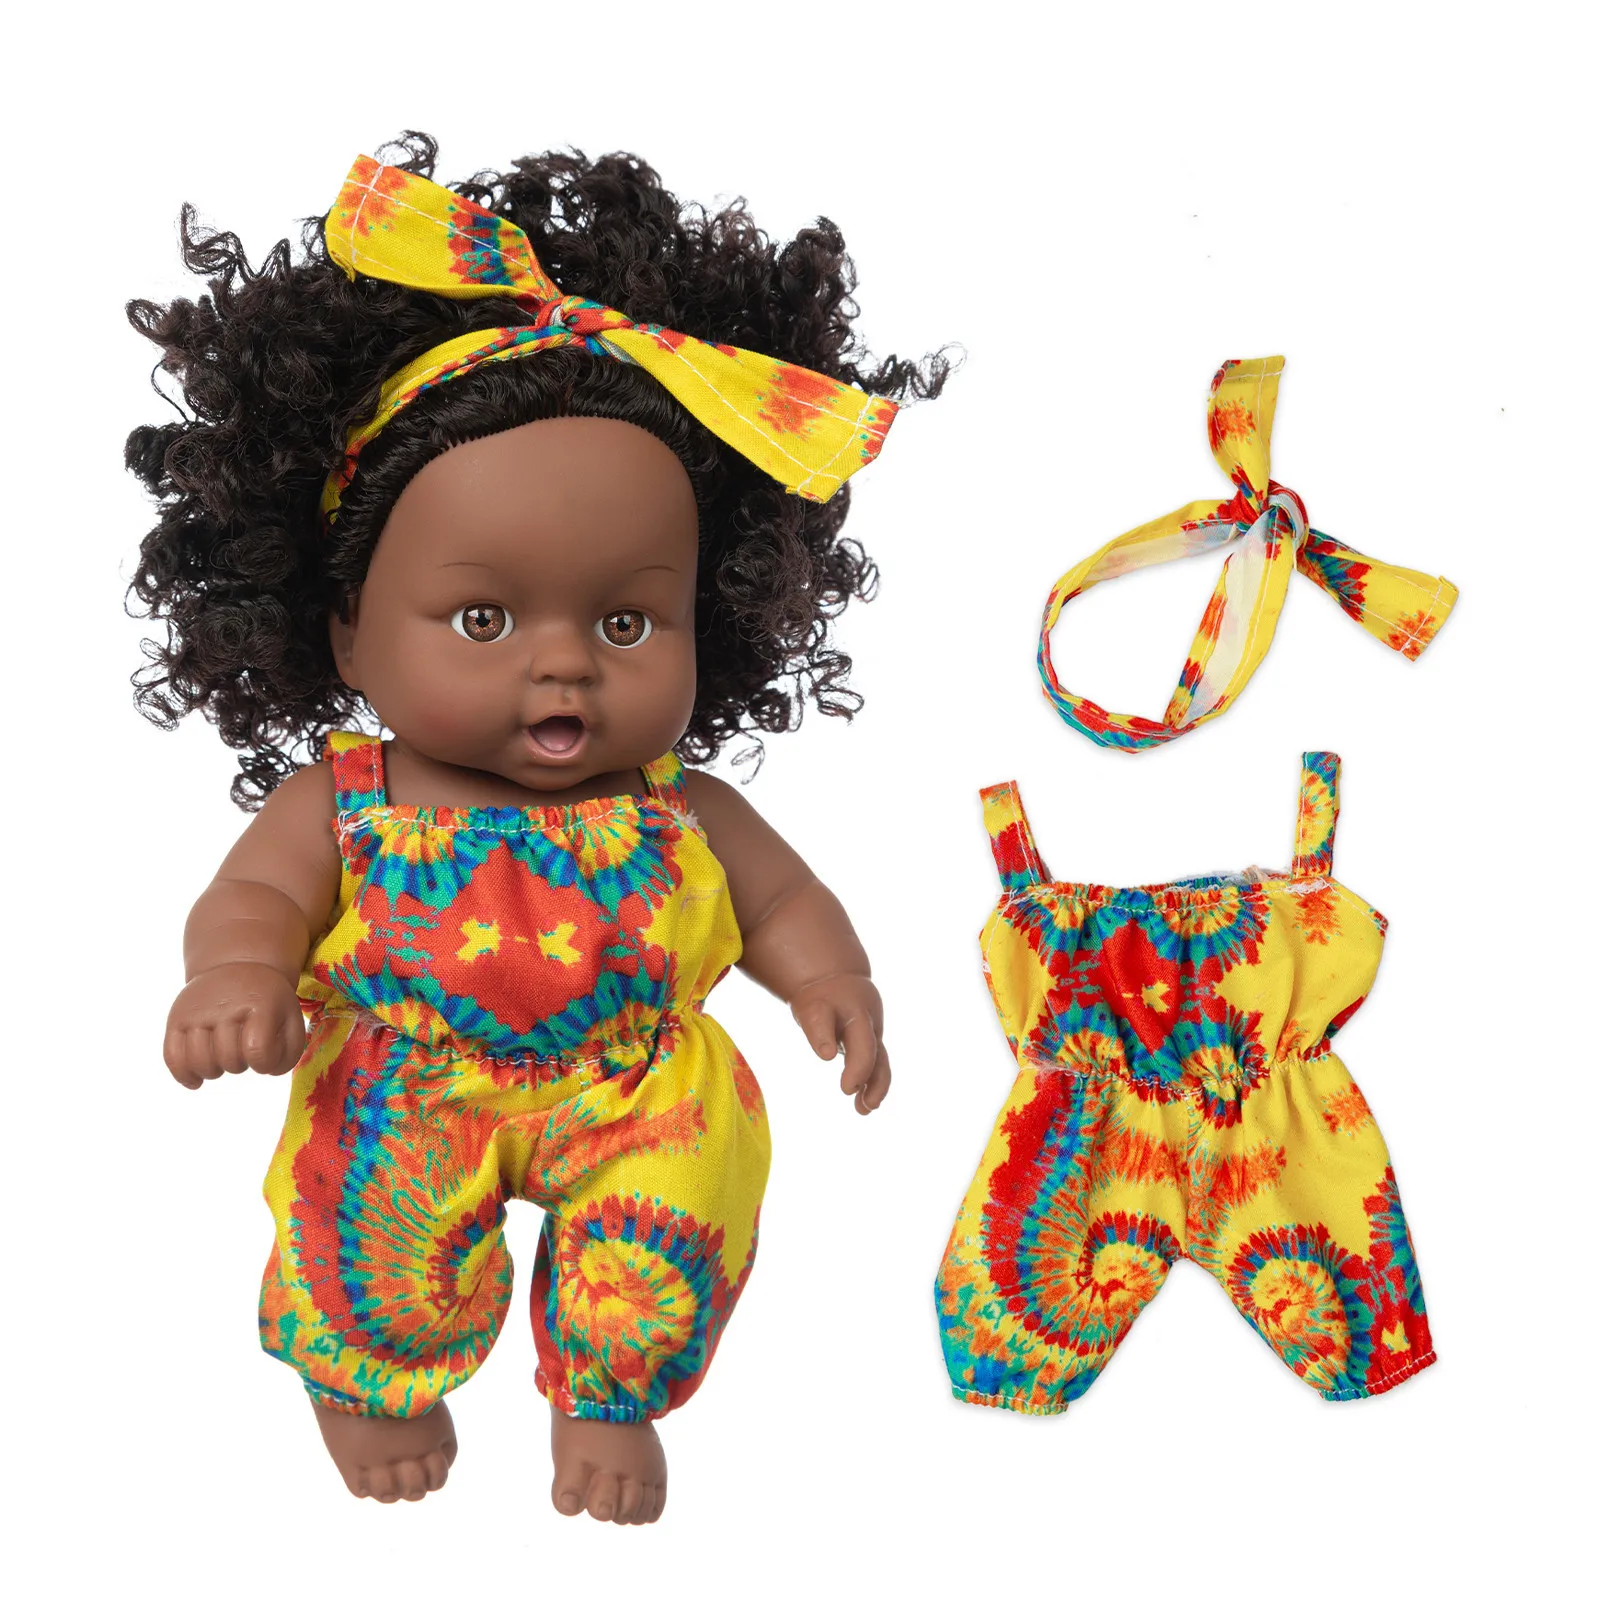 Black African Black Dolls Lifelike Explosion Head Wear A Headscarf Baby Cute Curly Black 8-Inch Reborn Clothes Vinyl Baby Toy